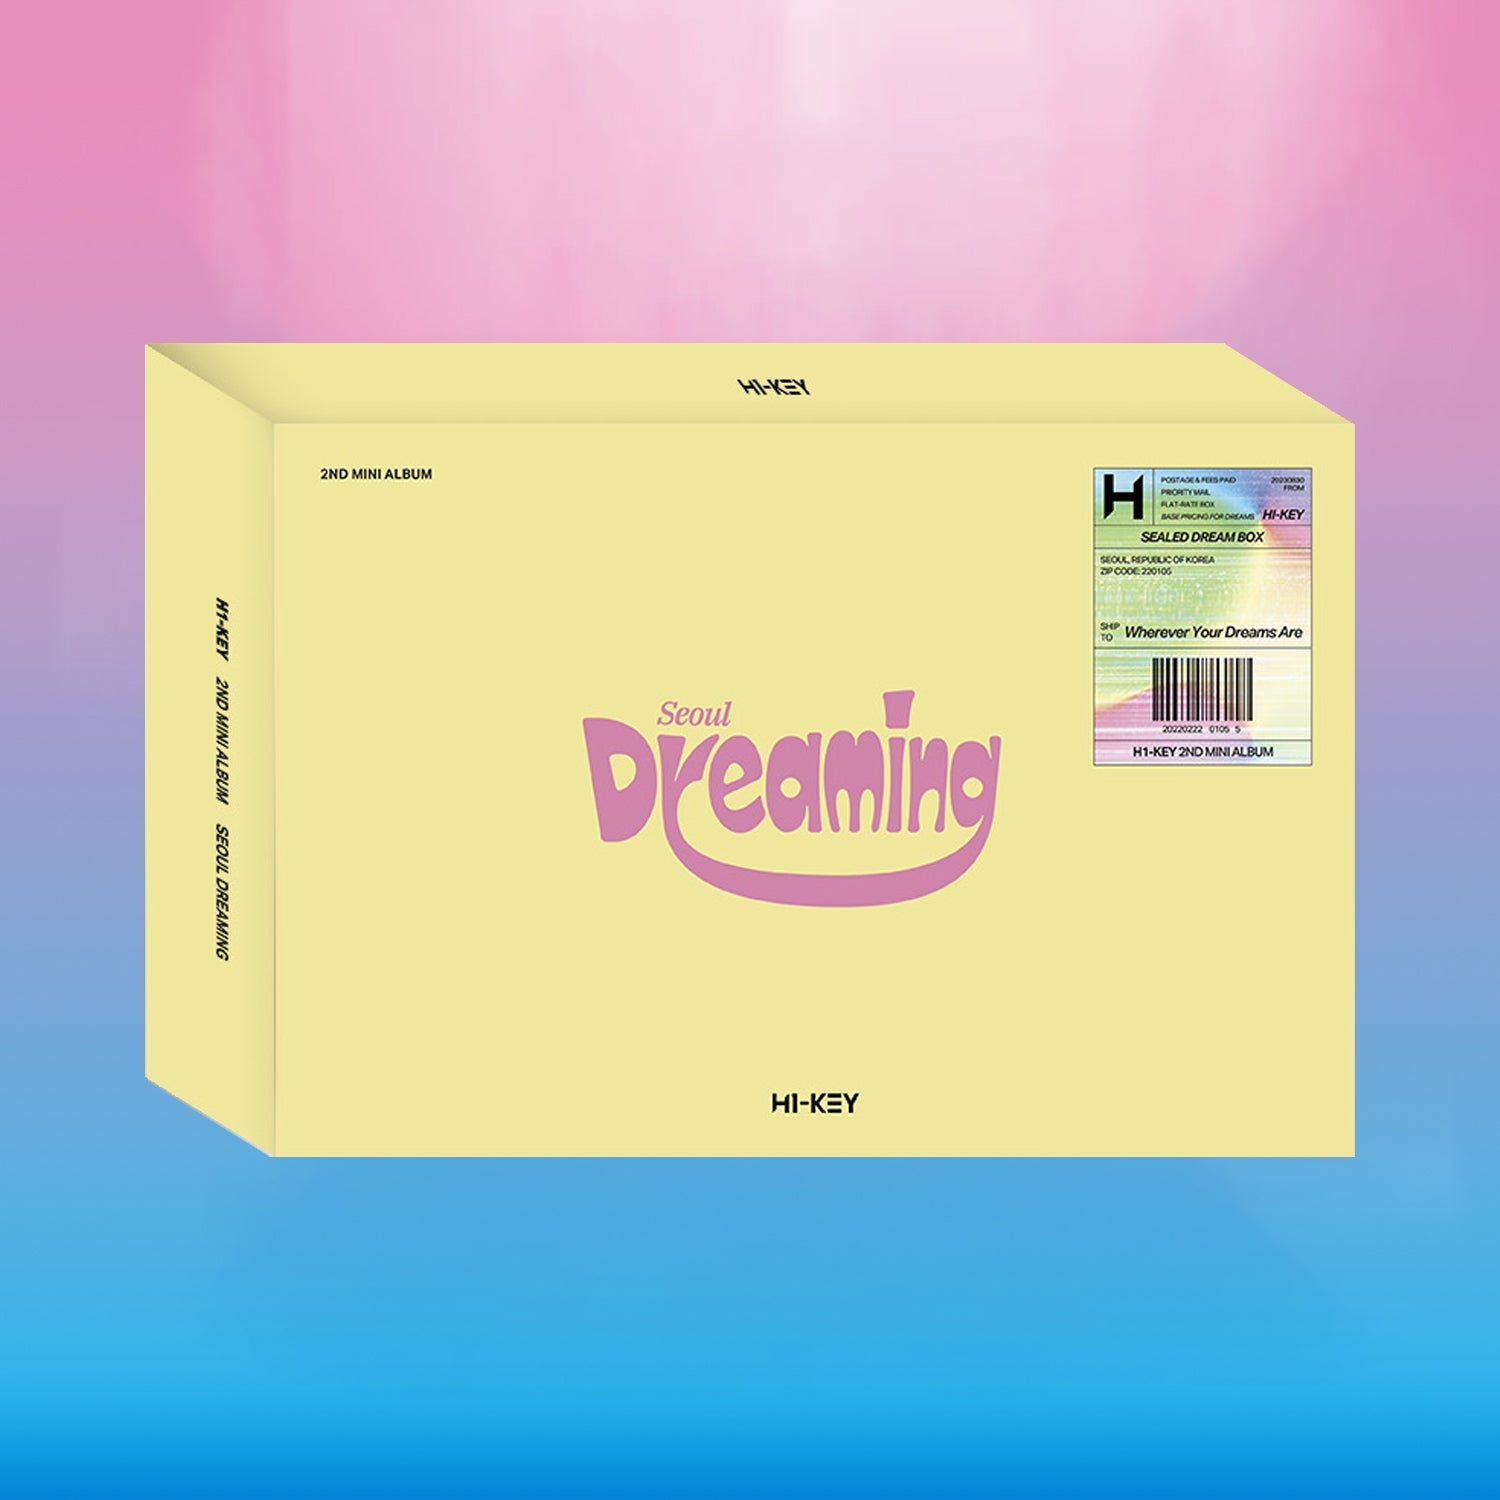 H1-KEY 2ND MINI ALBUM 'SEOUL DREAMING' DREAMING VERSION COVER